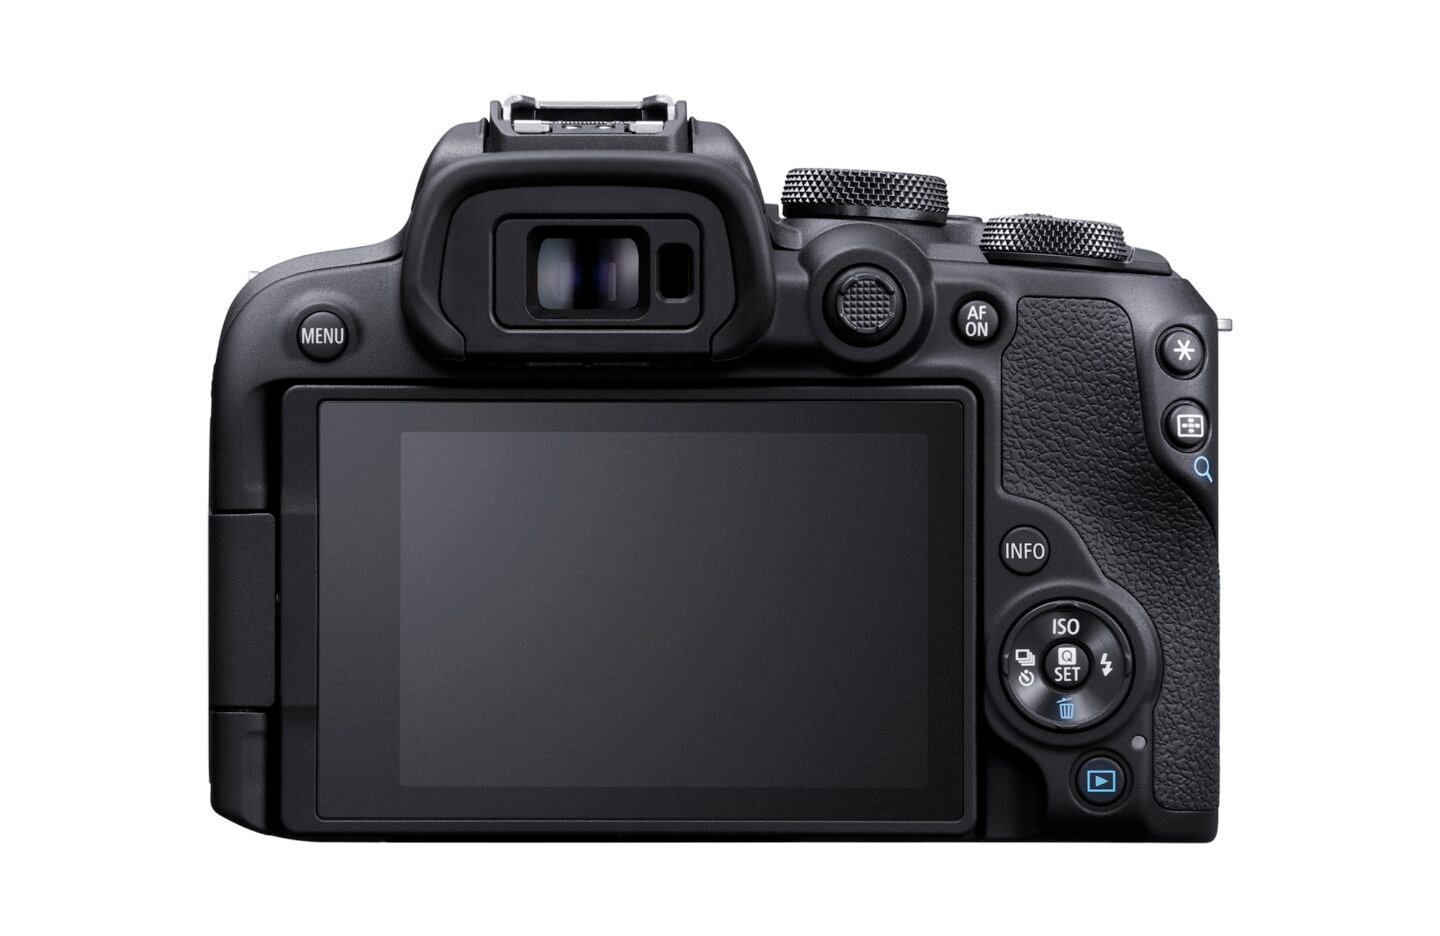 Canon has announced new EOS R7 and EOS R10 mirrorless cameras